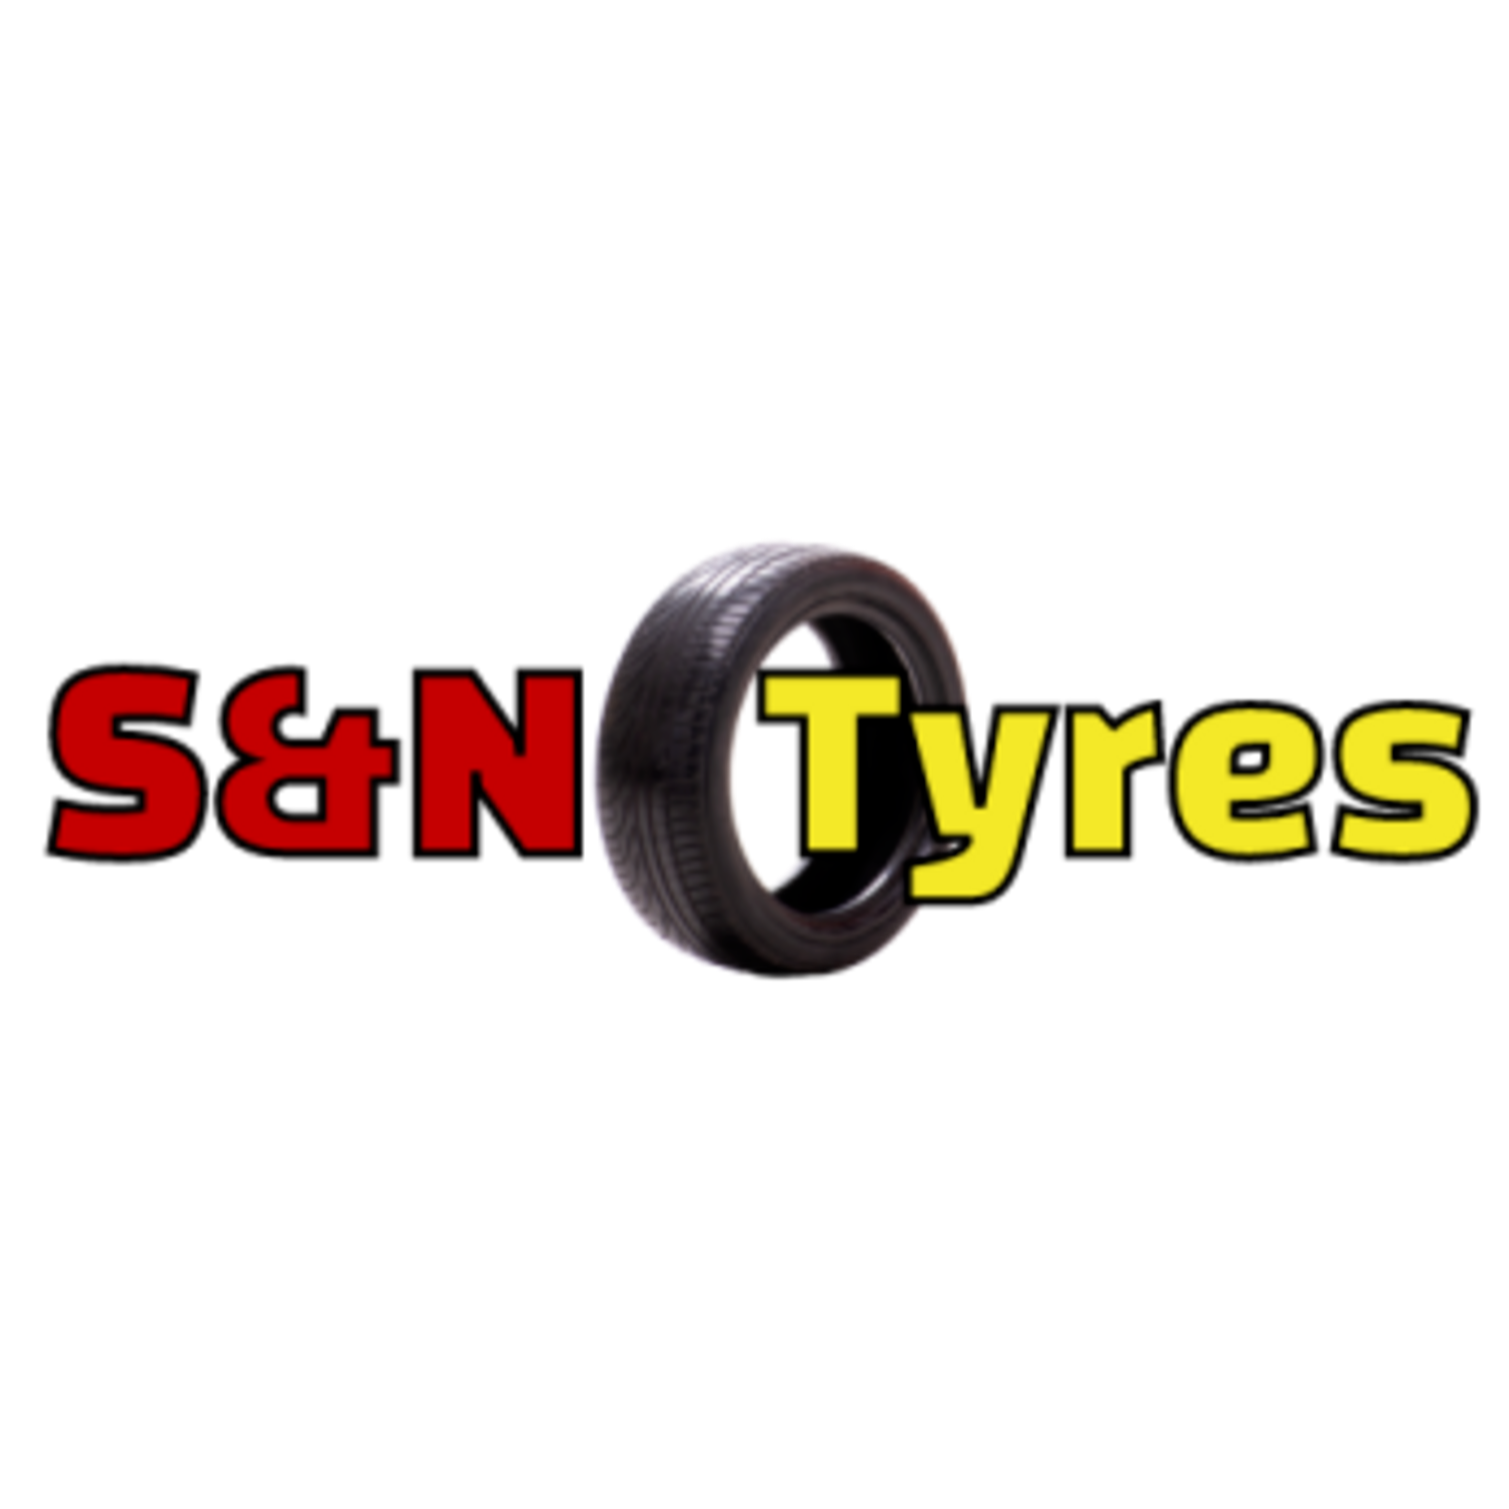 S & N Tyres 24/7 Emergency Tyres - Crawley, West Sussex RH10 1TN - 01293 447934 | ShowMeLocal.com